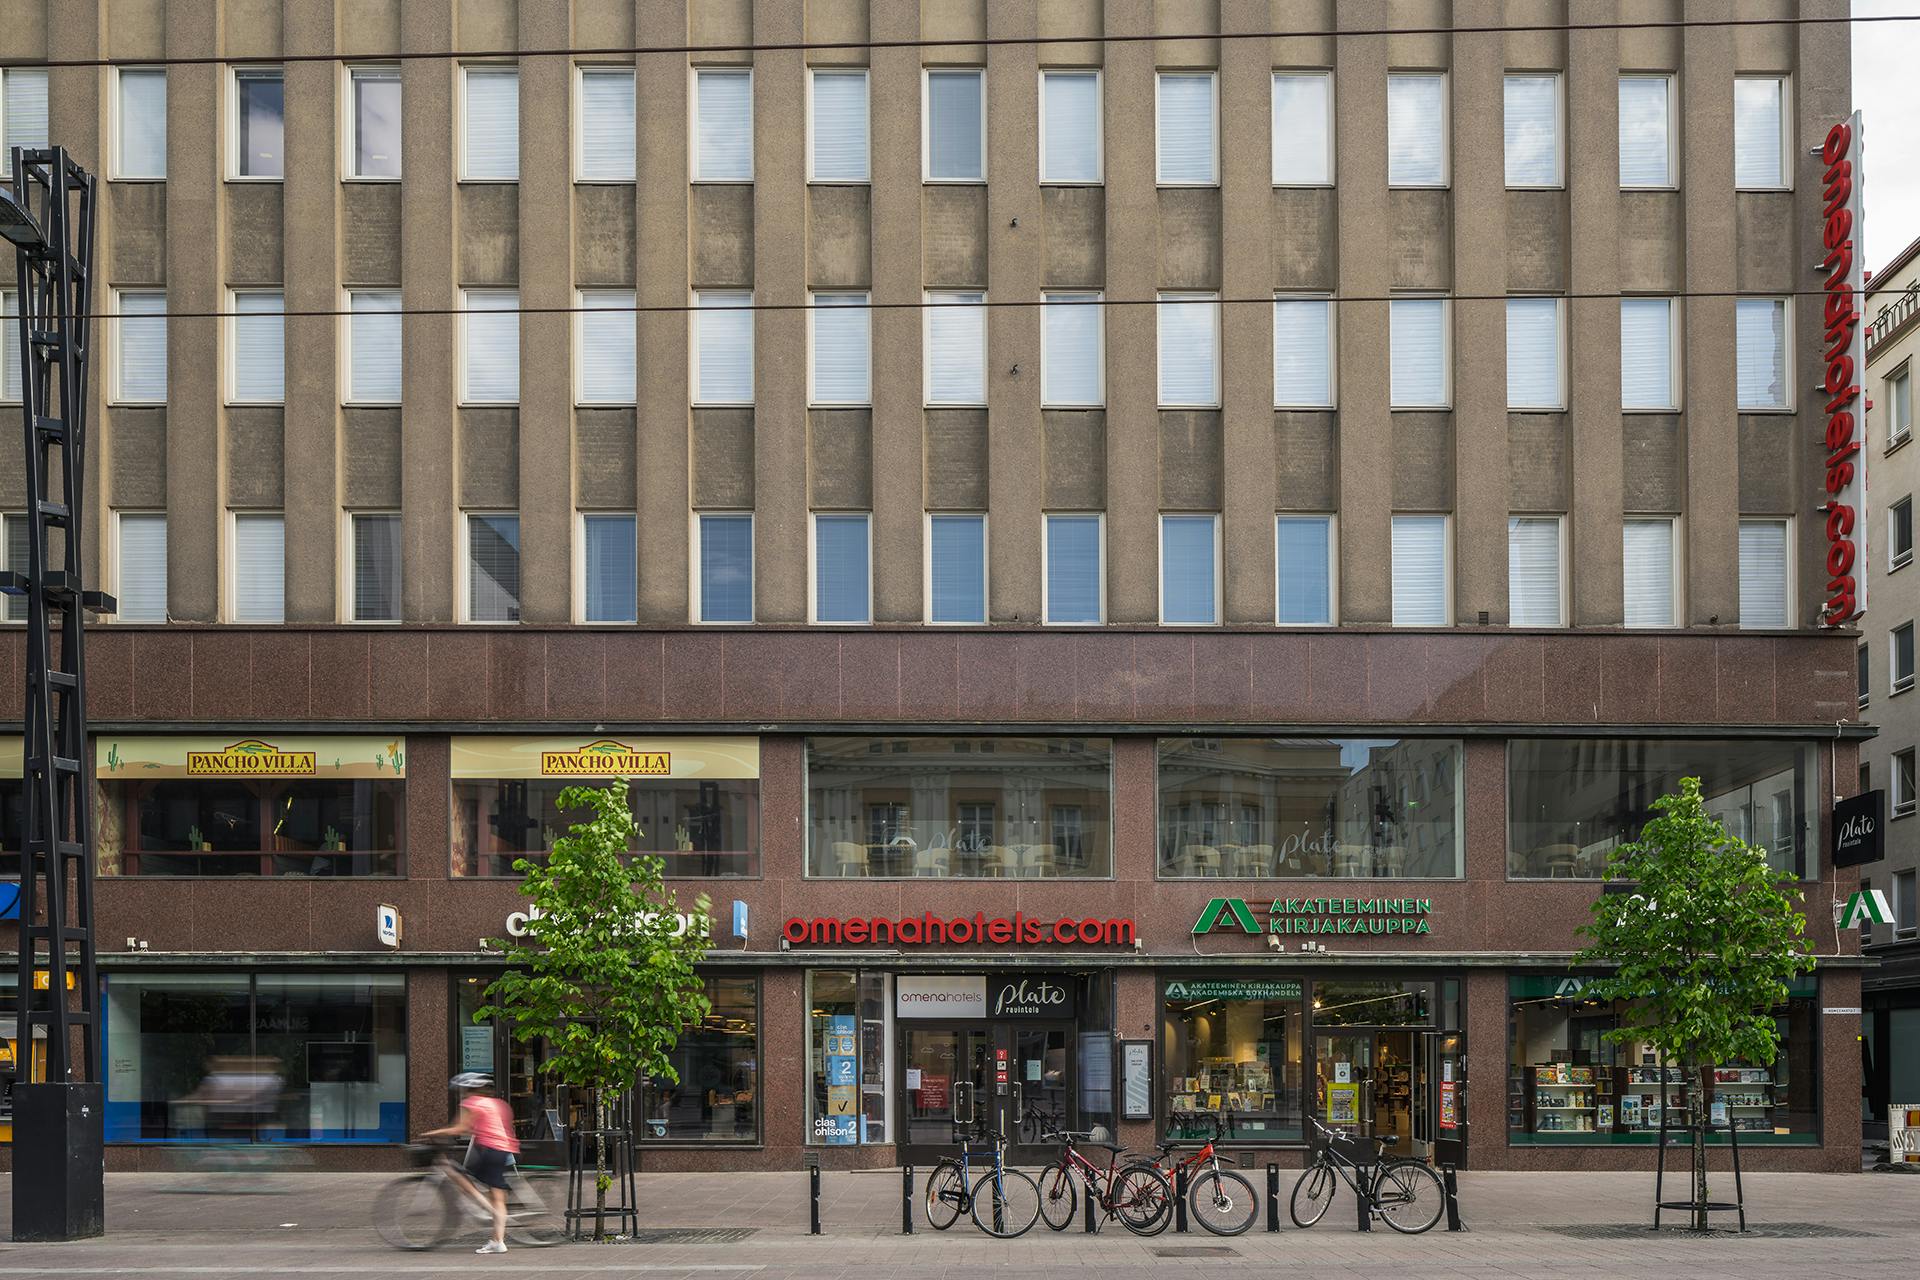 Omena-hotelli Tampere